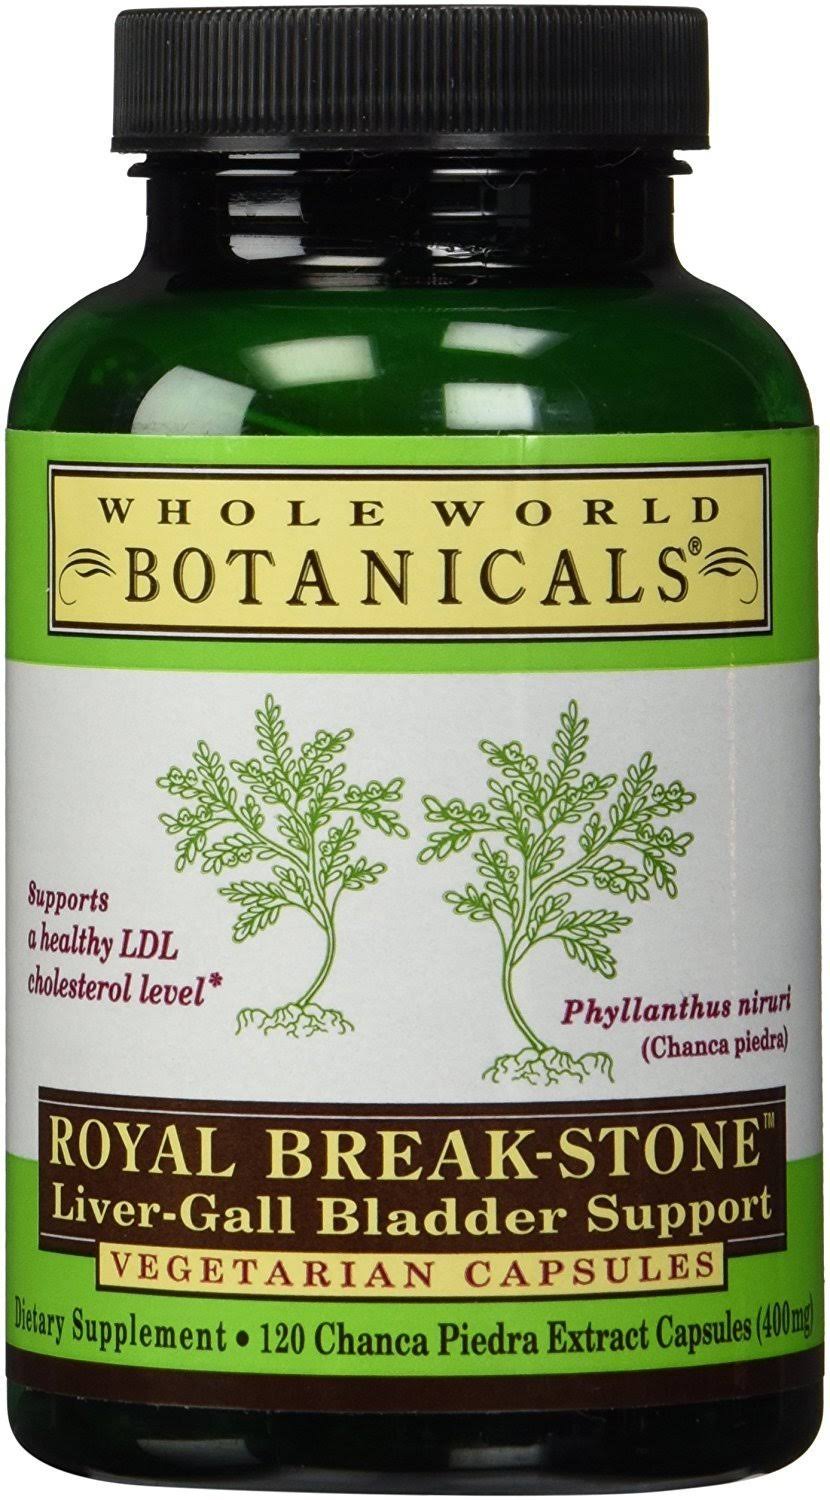 Whole World Botanicals Royal Break Stone Liver Gall Bladder Support - 400mg, 120ct